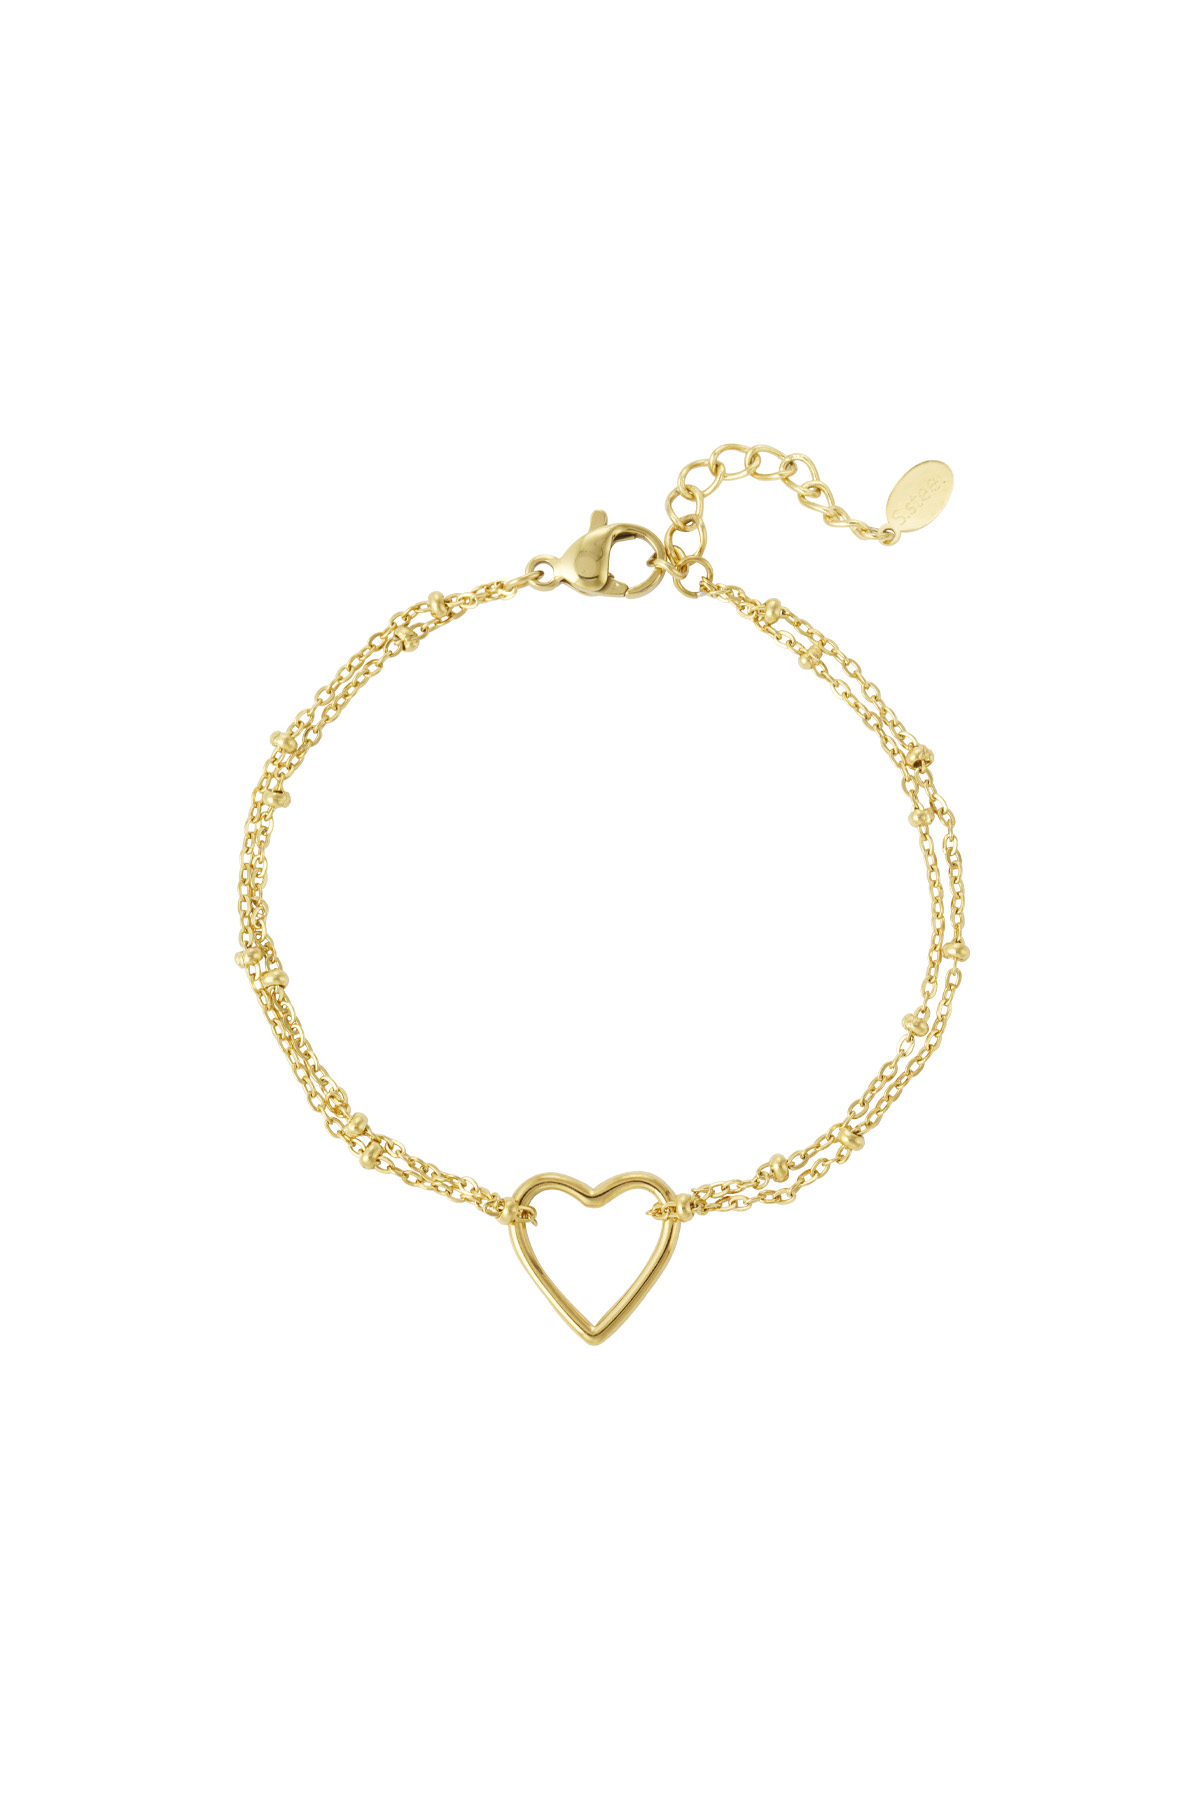 Bracelet heart hue - gold